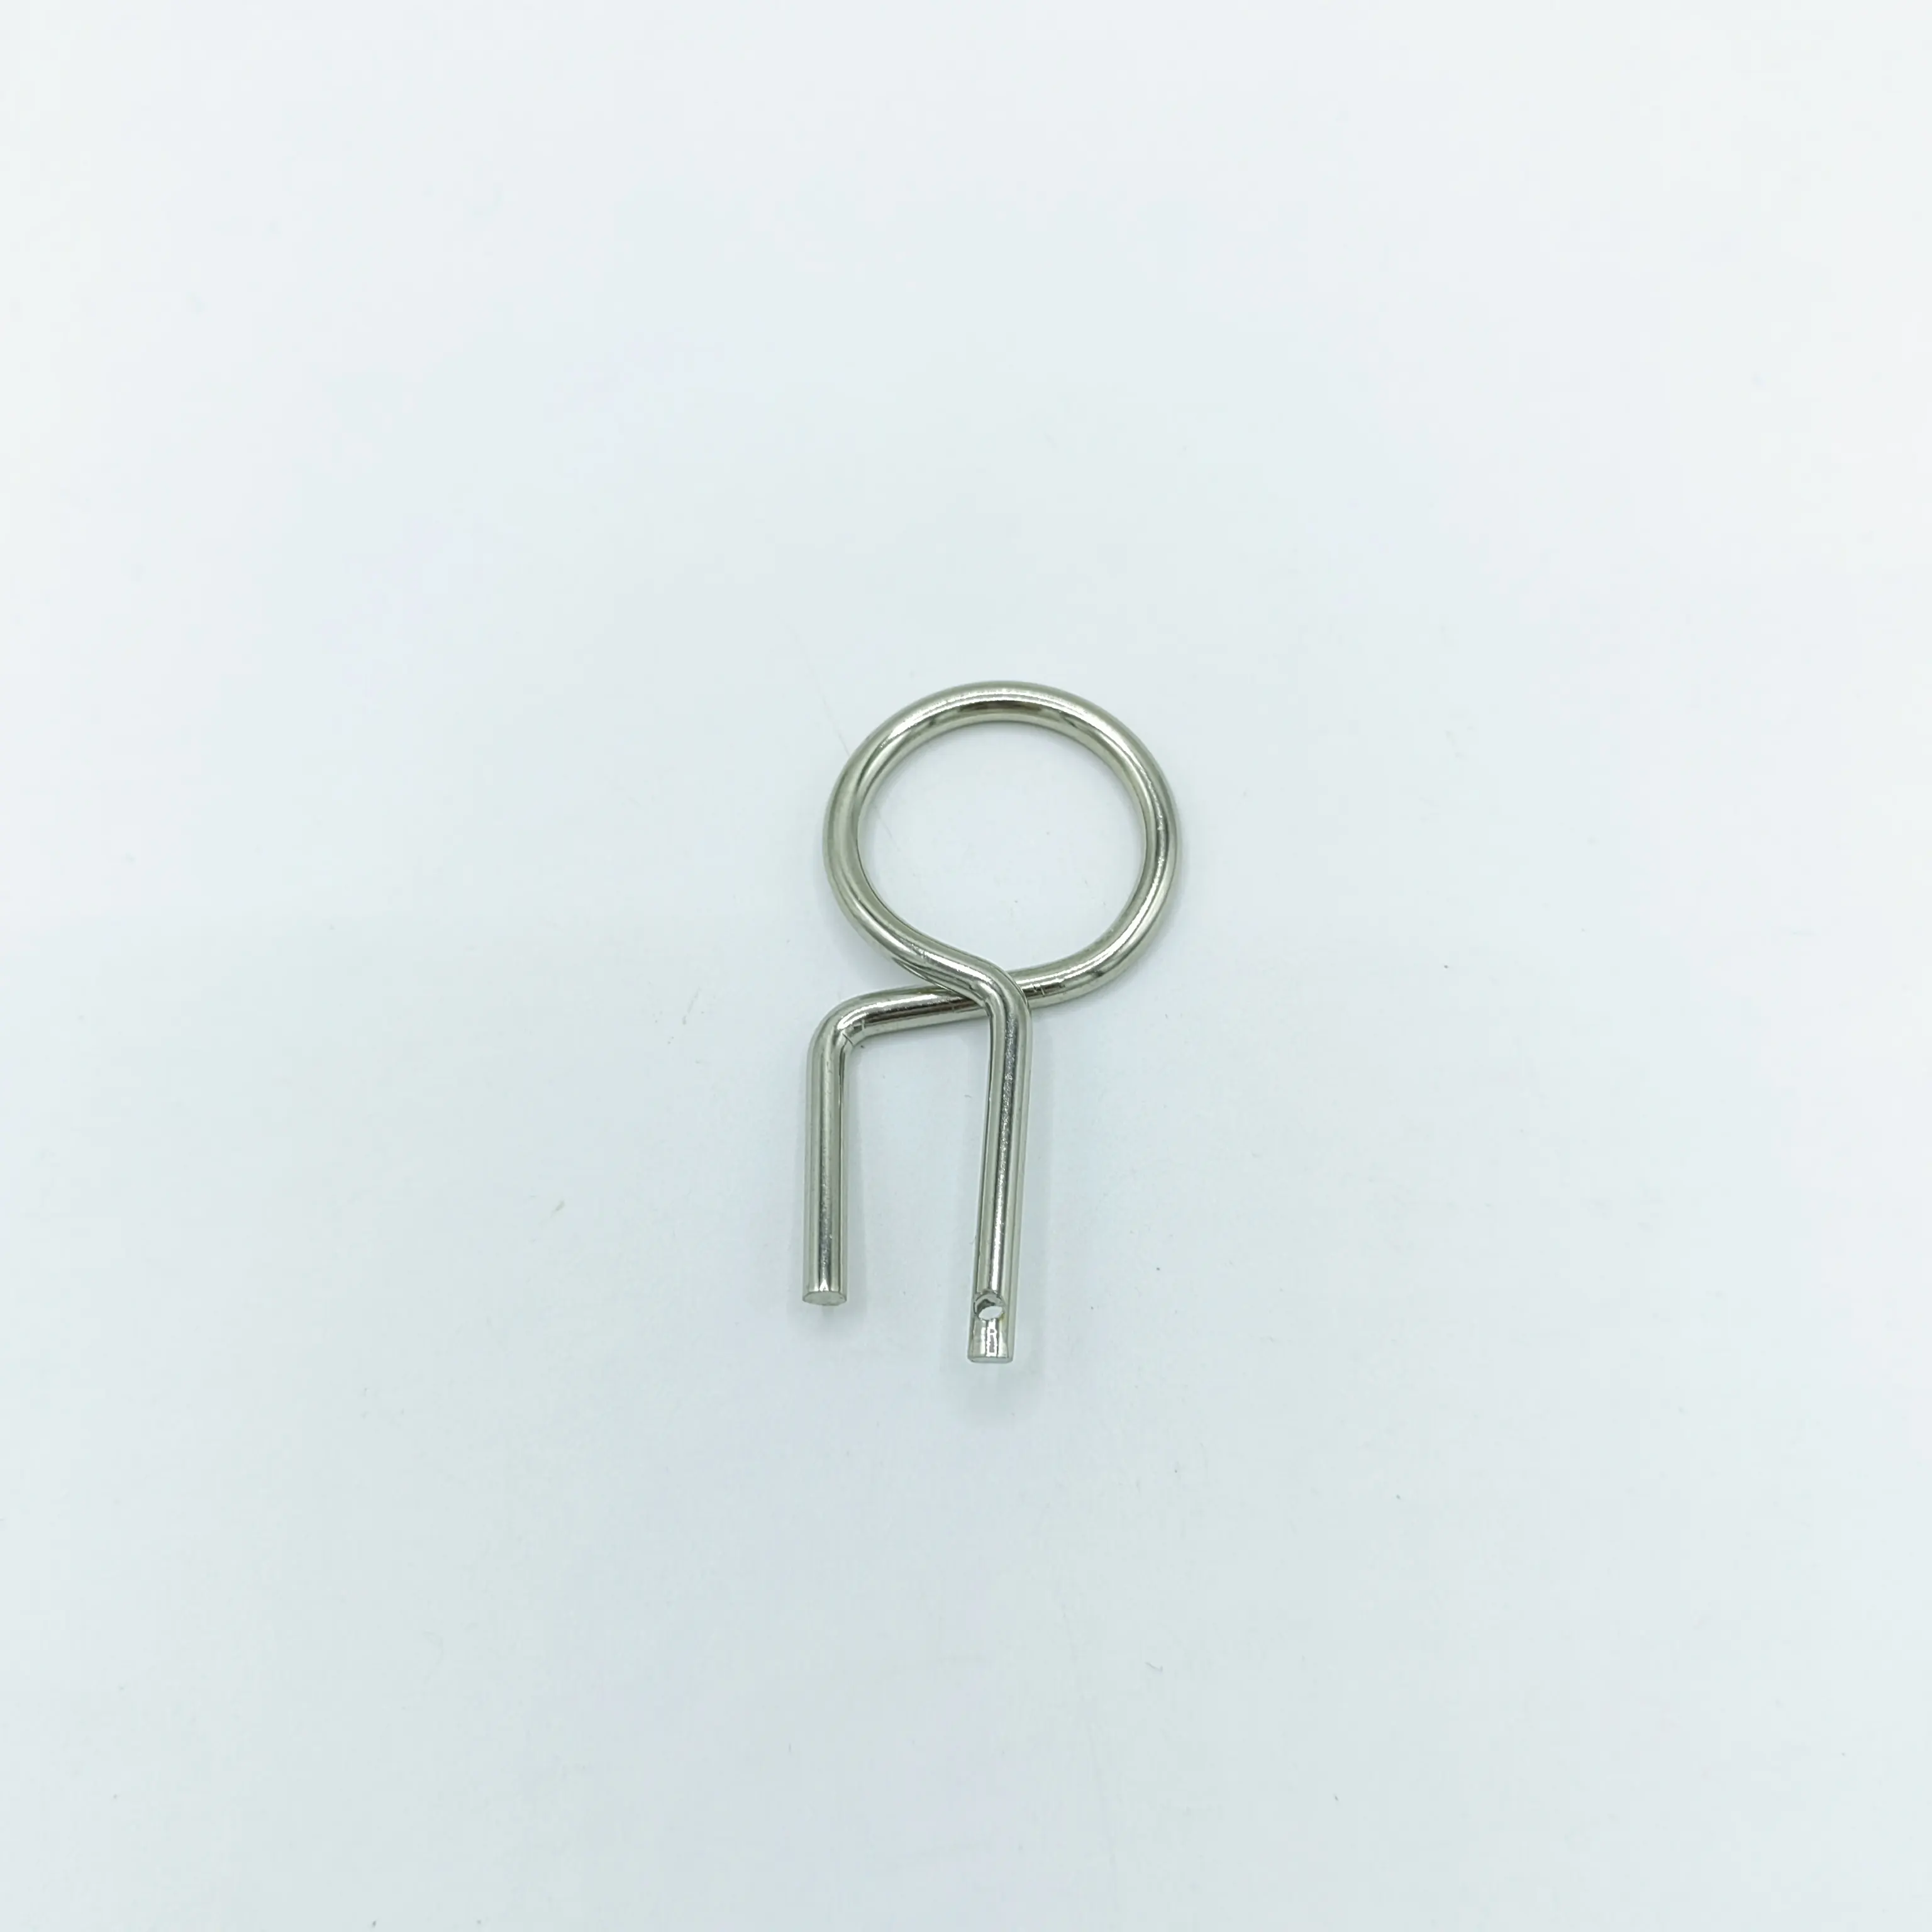 OEM spring manufacturing supply customized metal stainless steel locking pin tube spring clip R clip spring fixing pin